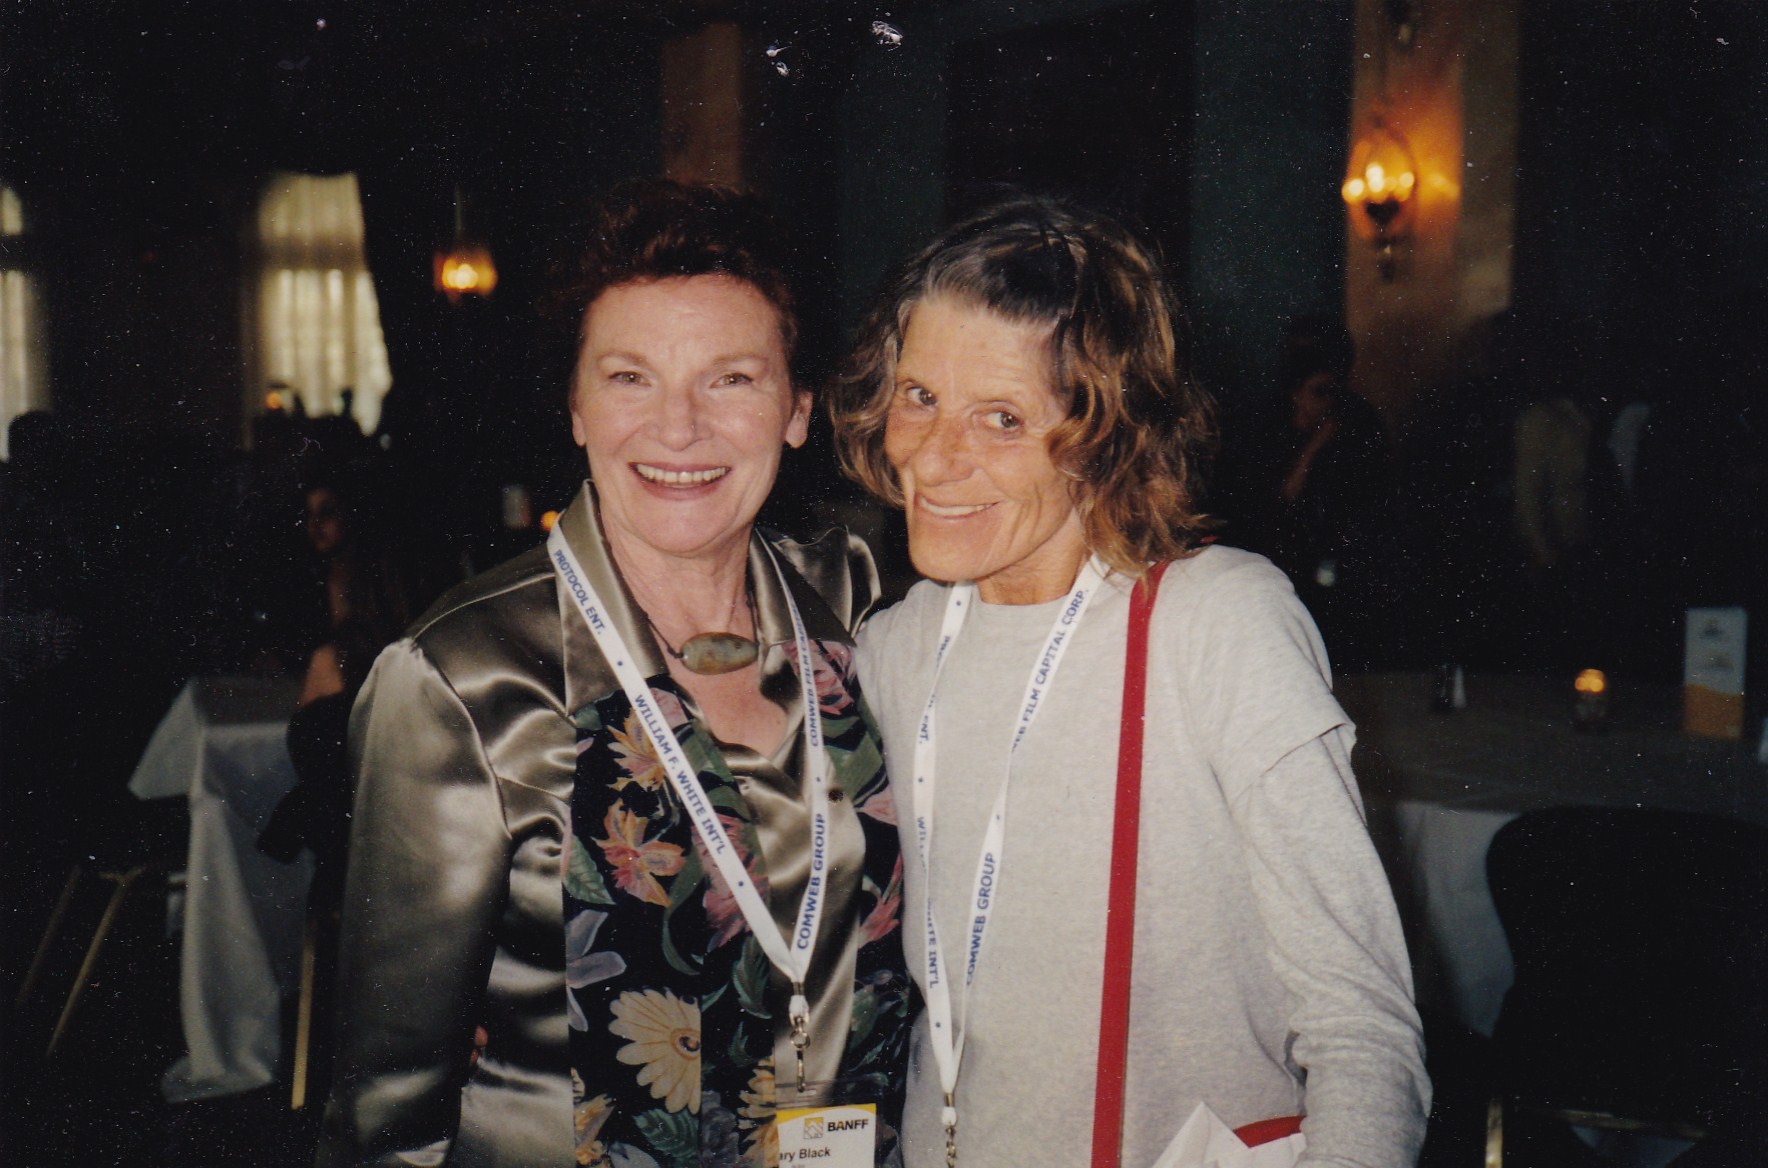 Still of Mary Black & Jackie Burroughs at the Banff World Media Festival 2005